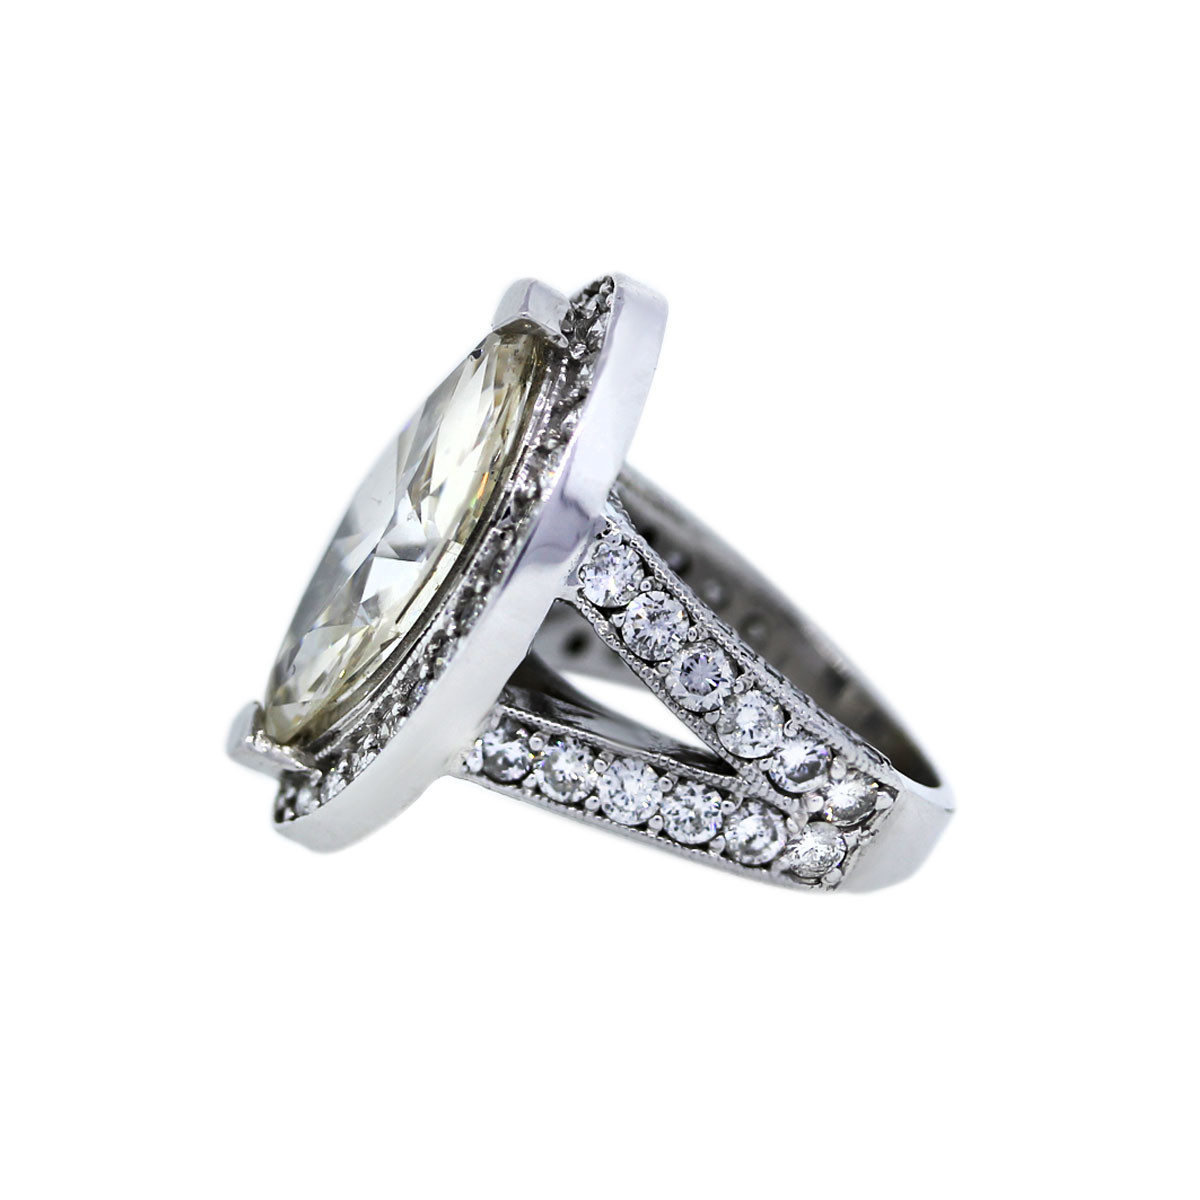 Marquise Diamond Engagement Rings
 14k White Gold 7 20ct Marquise Diamond Engagement Ring